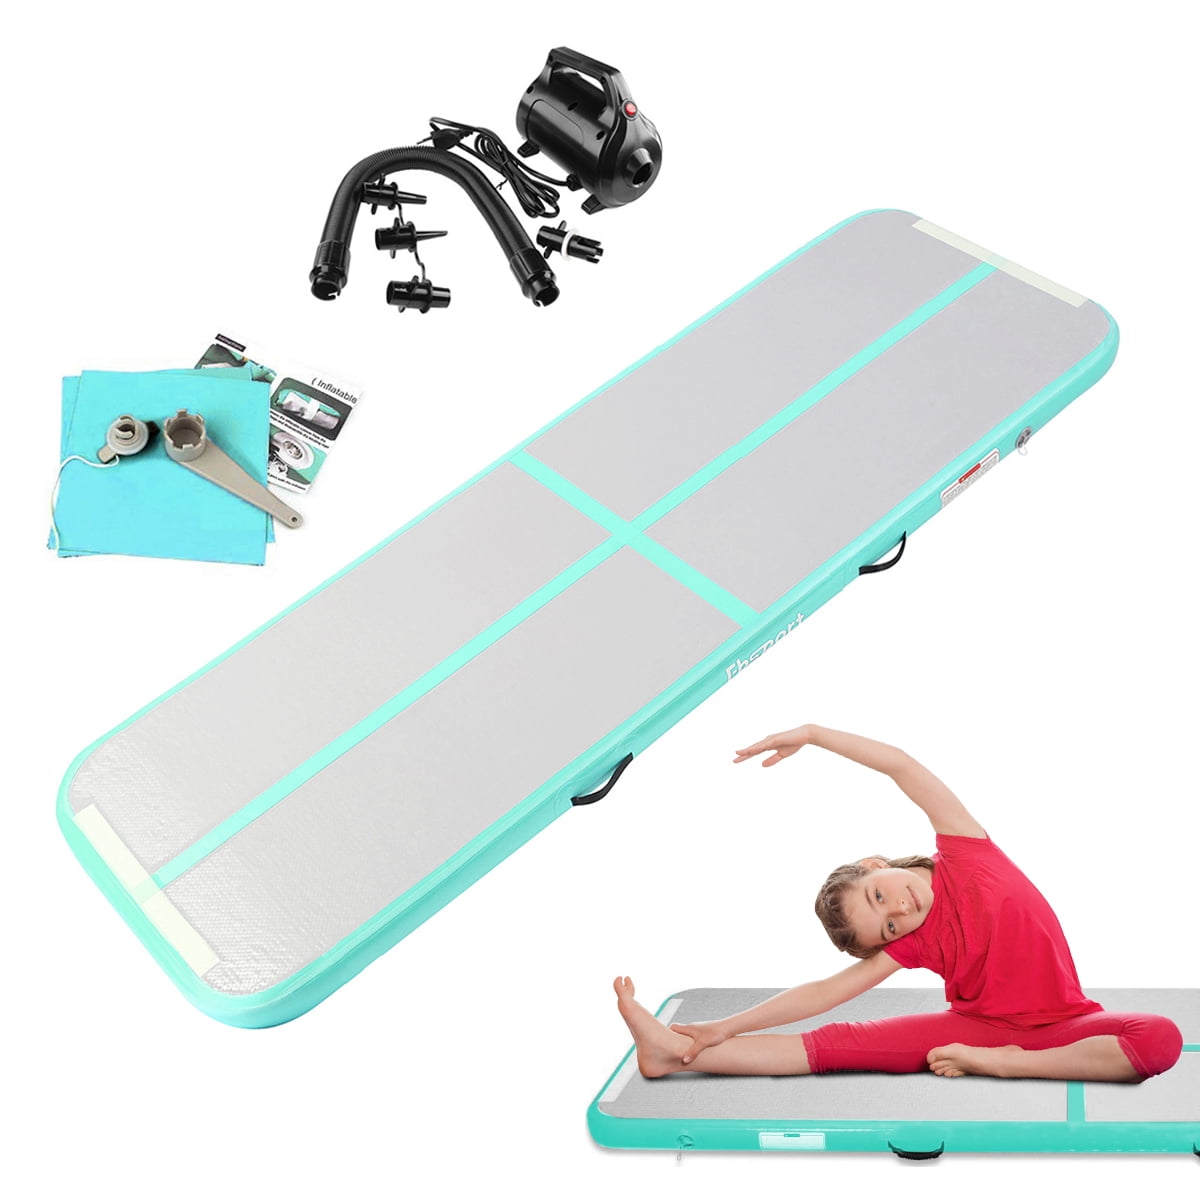 Details about   Inflatable Air Mat Track Yoga Floor Gymnastics Tumbling Mats W/ Pump 3.3ft-20Ft 